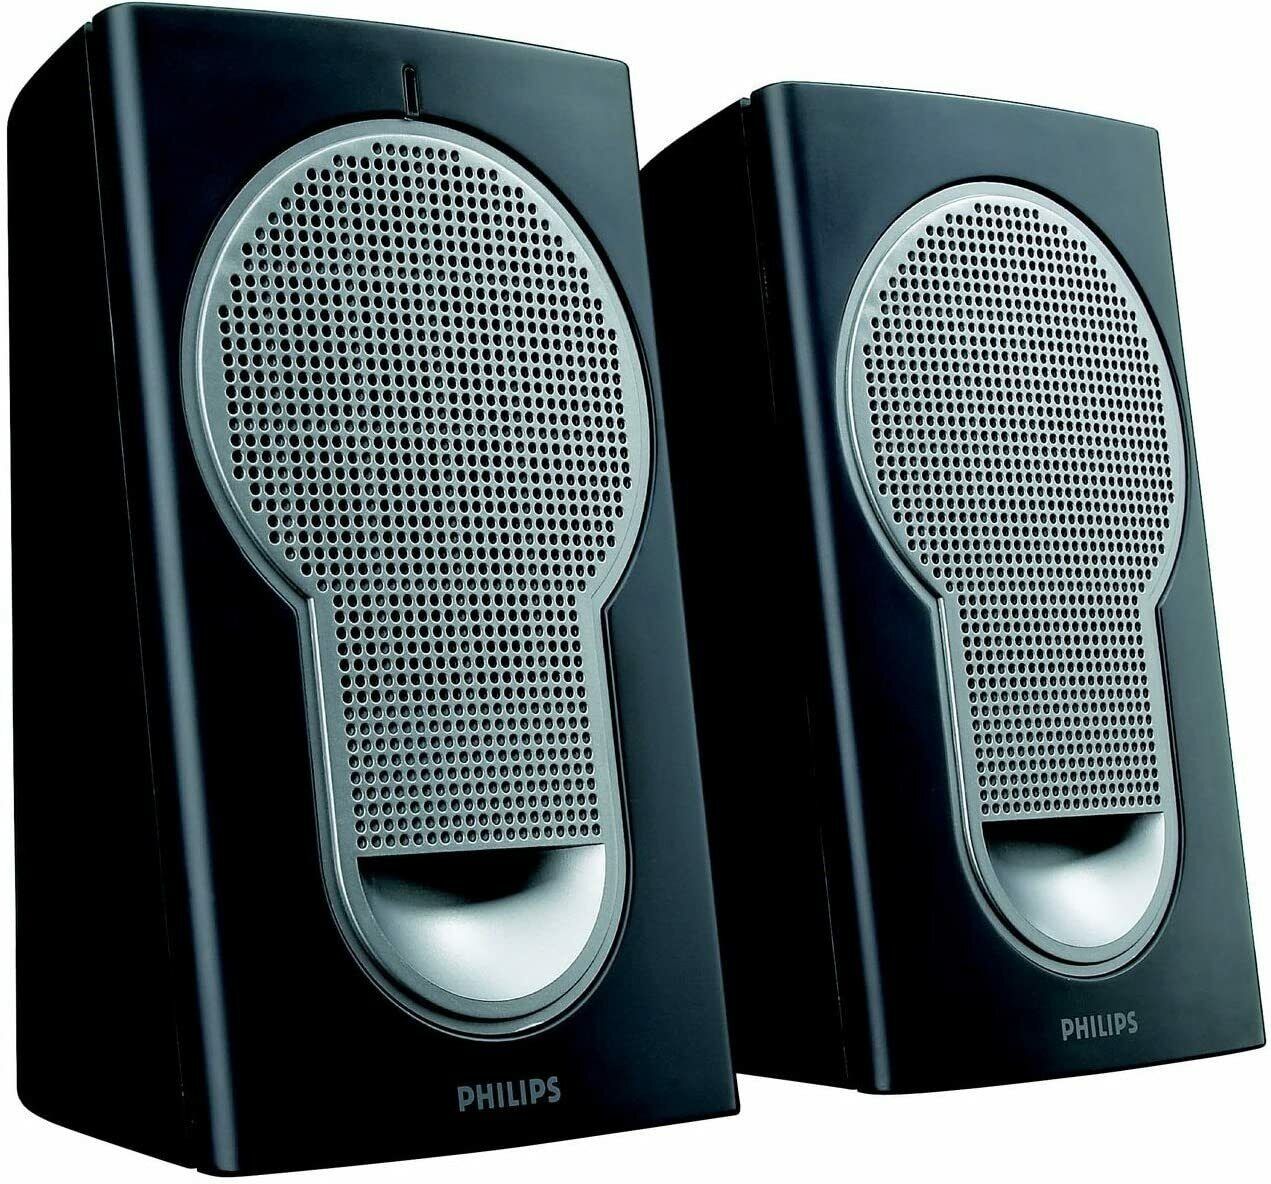 Evaluable interior Simplicity Philips PC Speakers MMS 121/05 8710895816137 | eBay